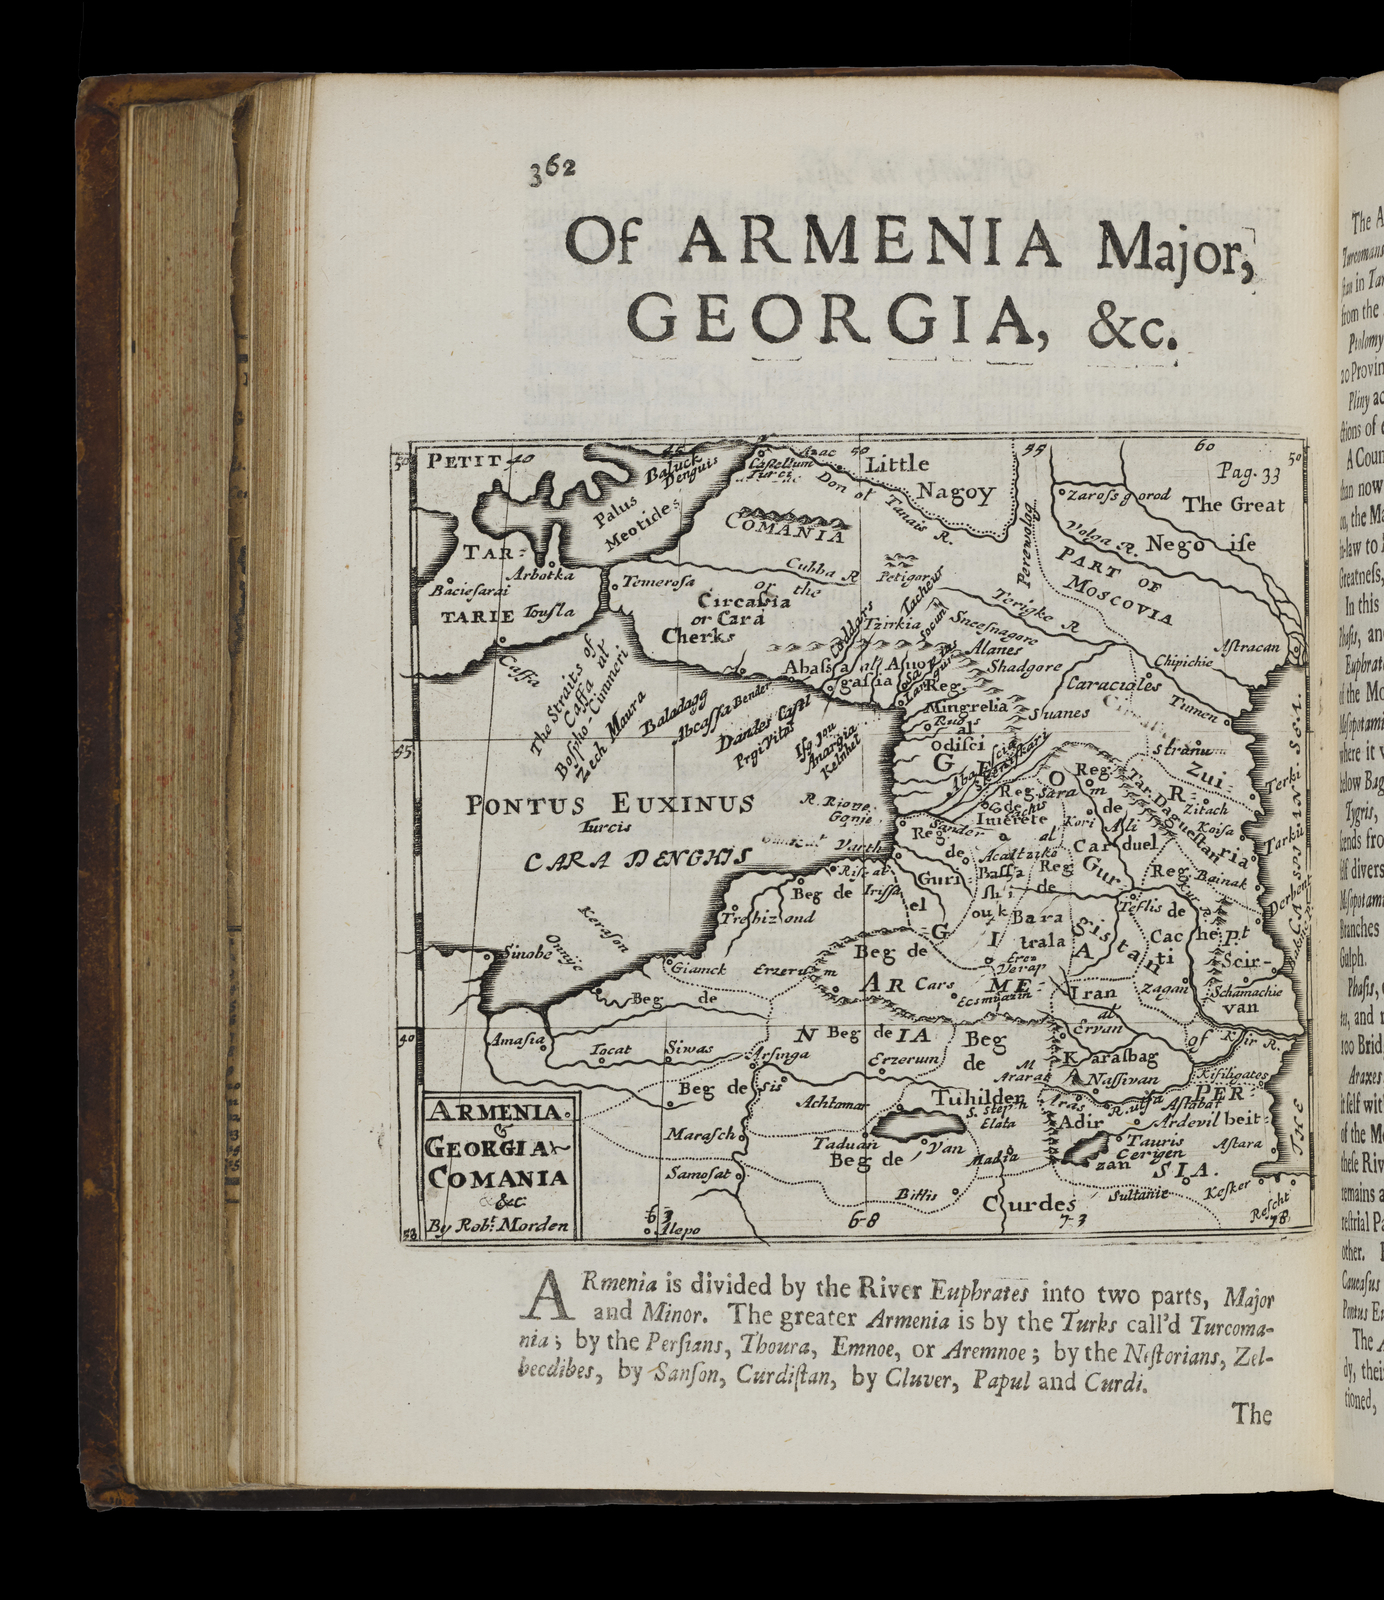 Of Armenia major, Georgia, &c